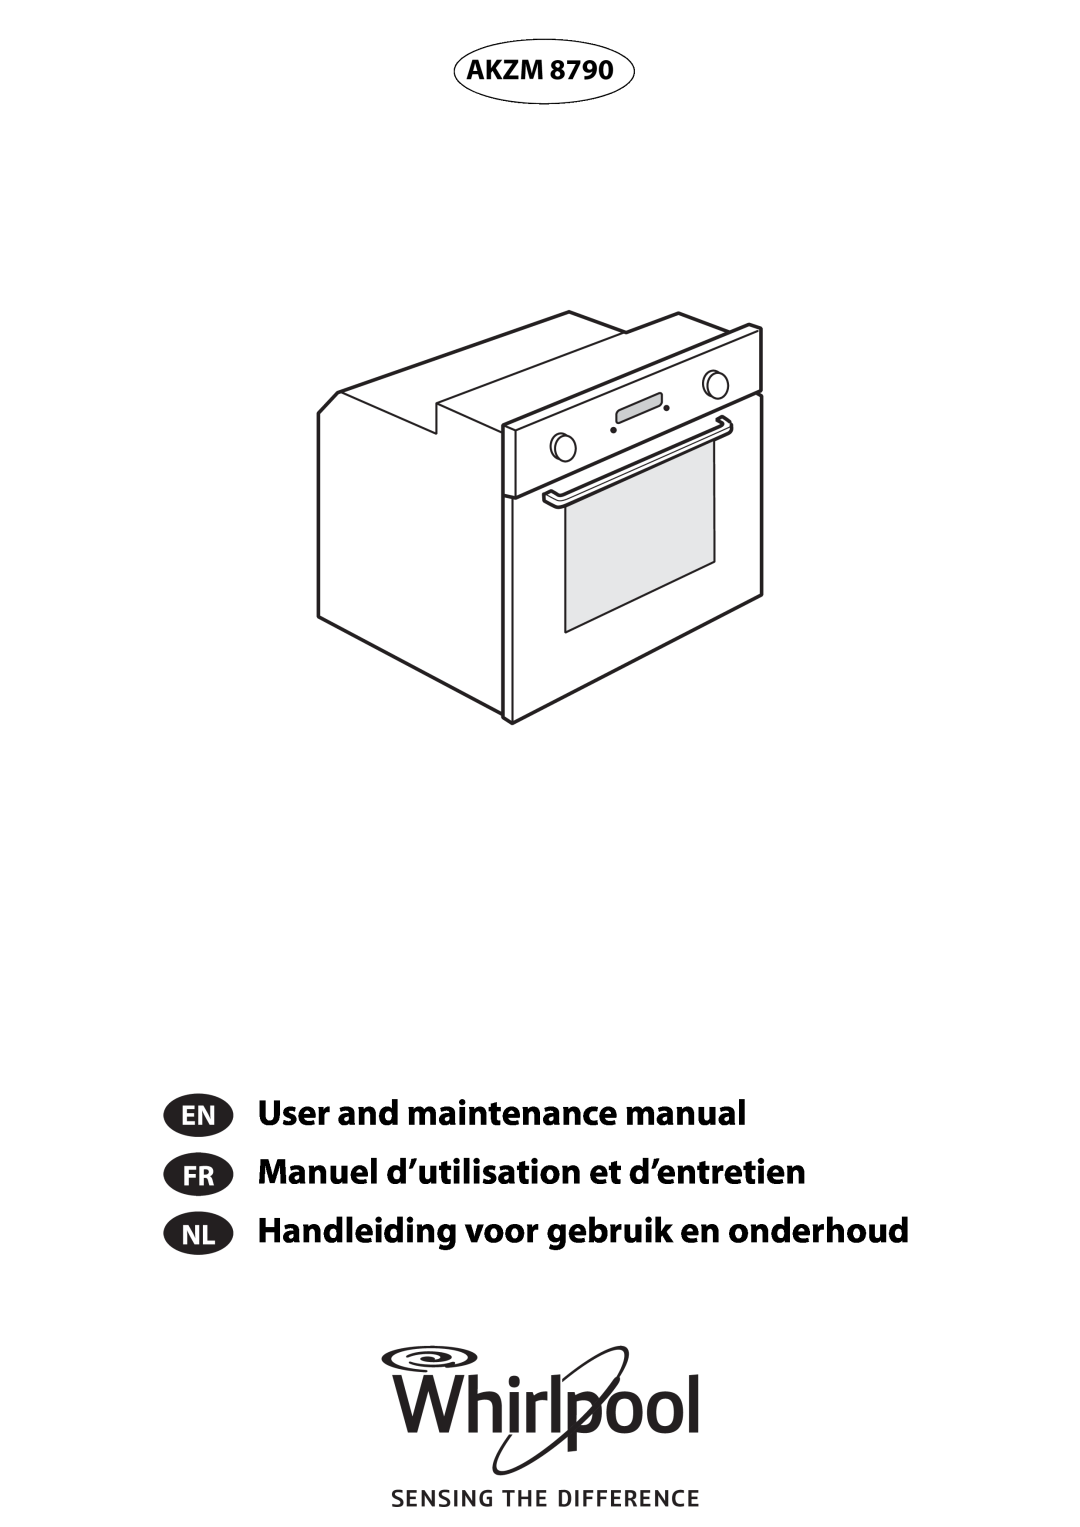 Whirlpool 8790 manuel dutilisation EN User and maintenance manual Manuel d’utilisation et d’entretien, Akzm 